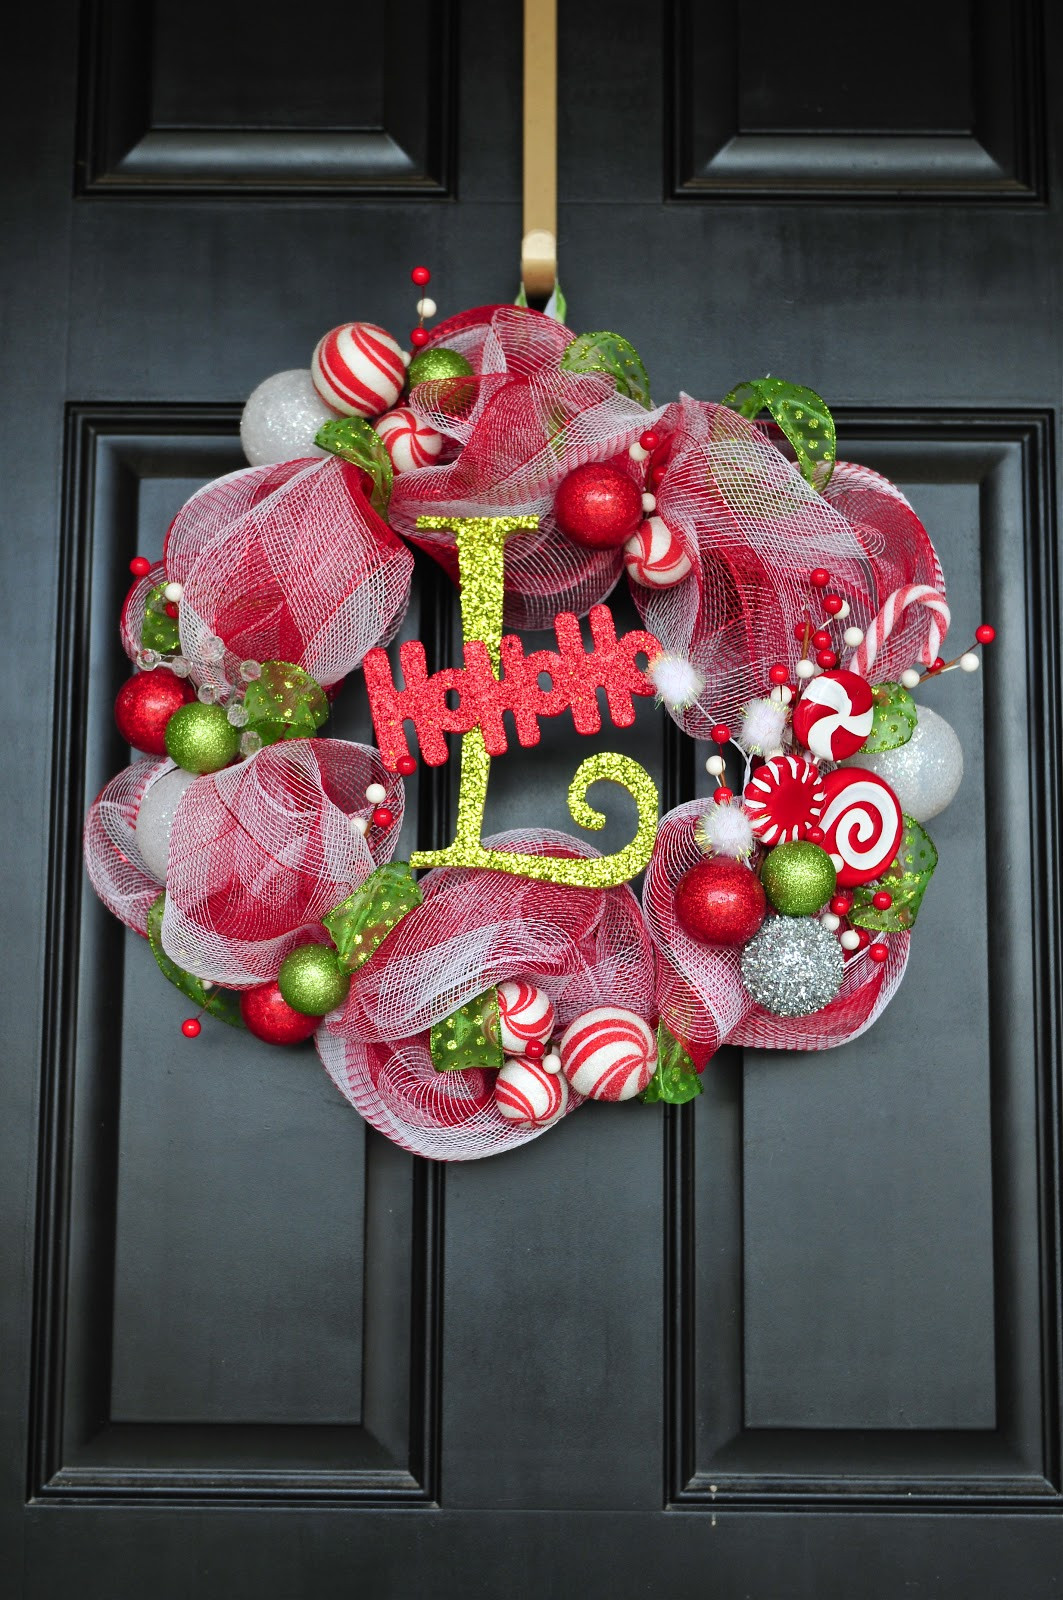 Best ideas about DIY Wreaths Christmas
. Save or Pin DIY Til We Die Easy Christmas mesh wreaths Now.